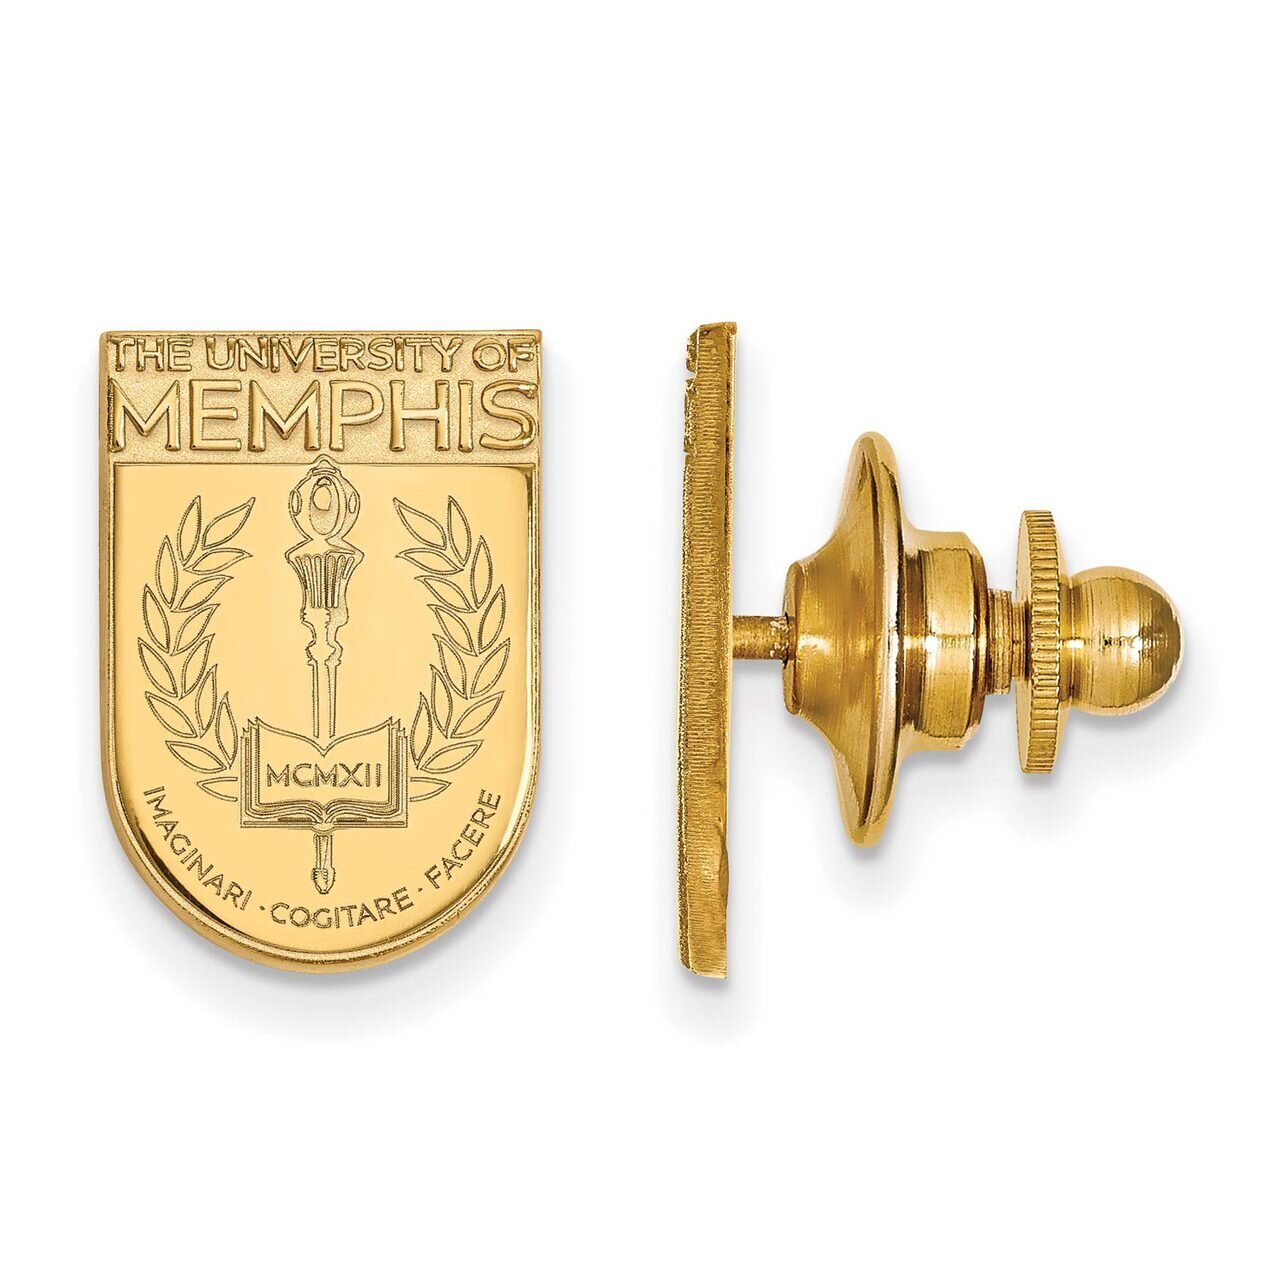 University of Memphis Crest Lapel Pin Gold-plated Silver GP028UMP